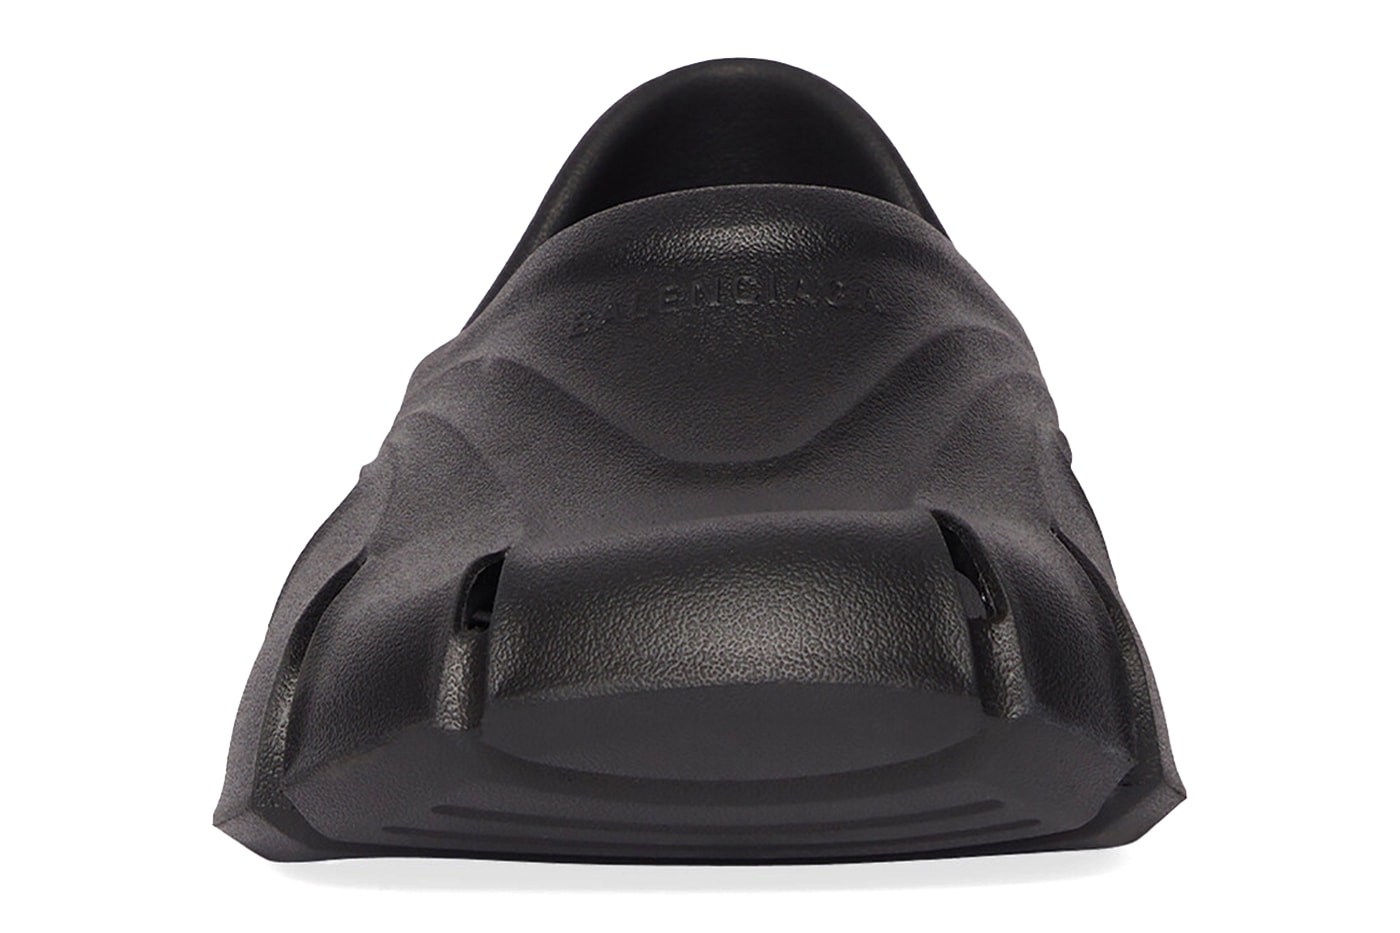 Balenciaga mold closed rubber clog release slides summer sandals 